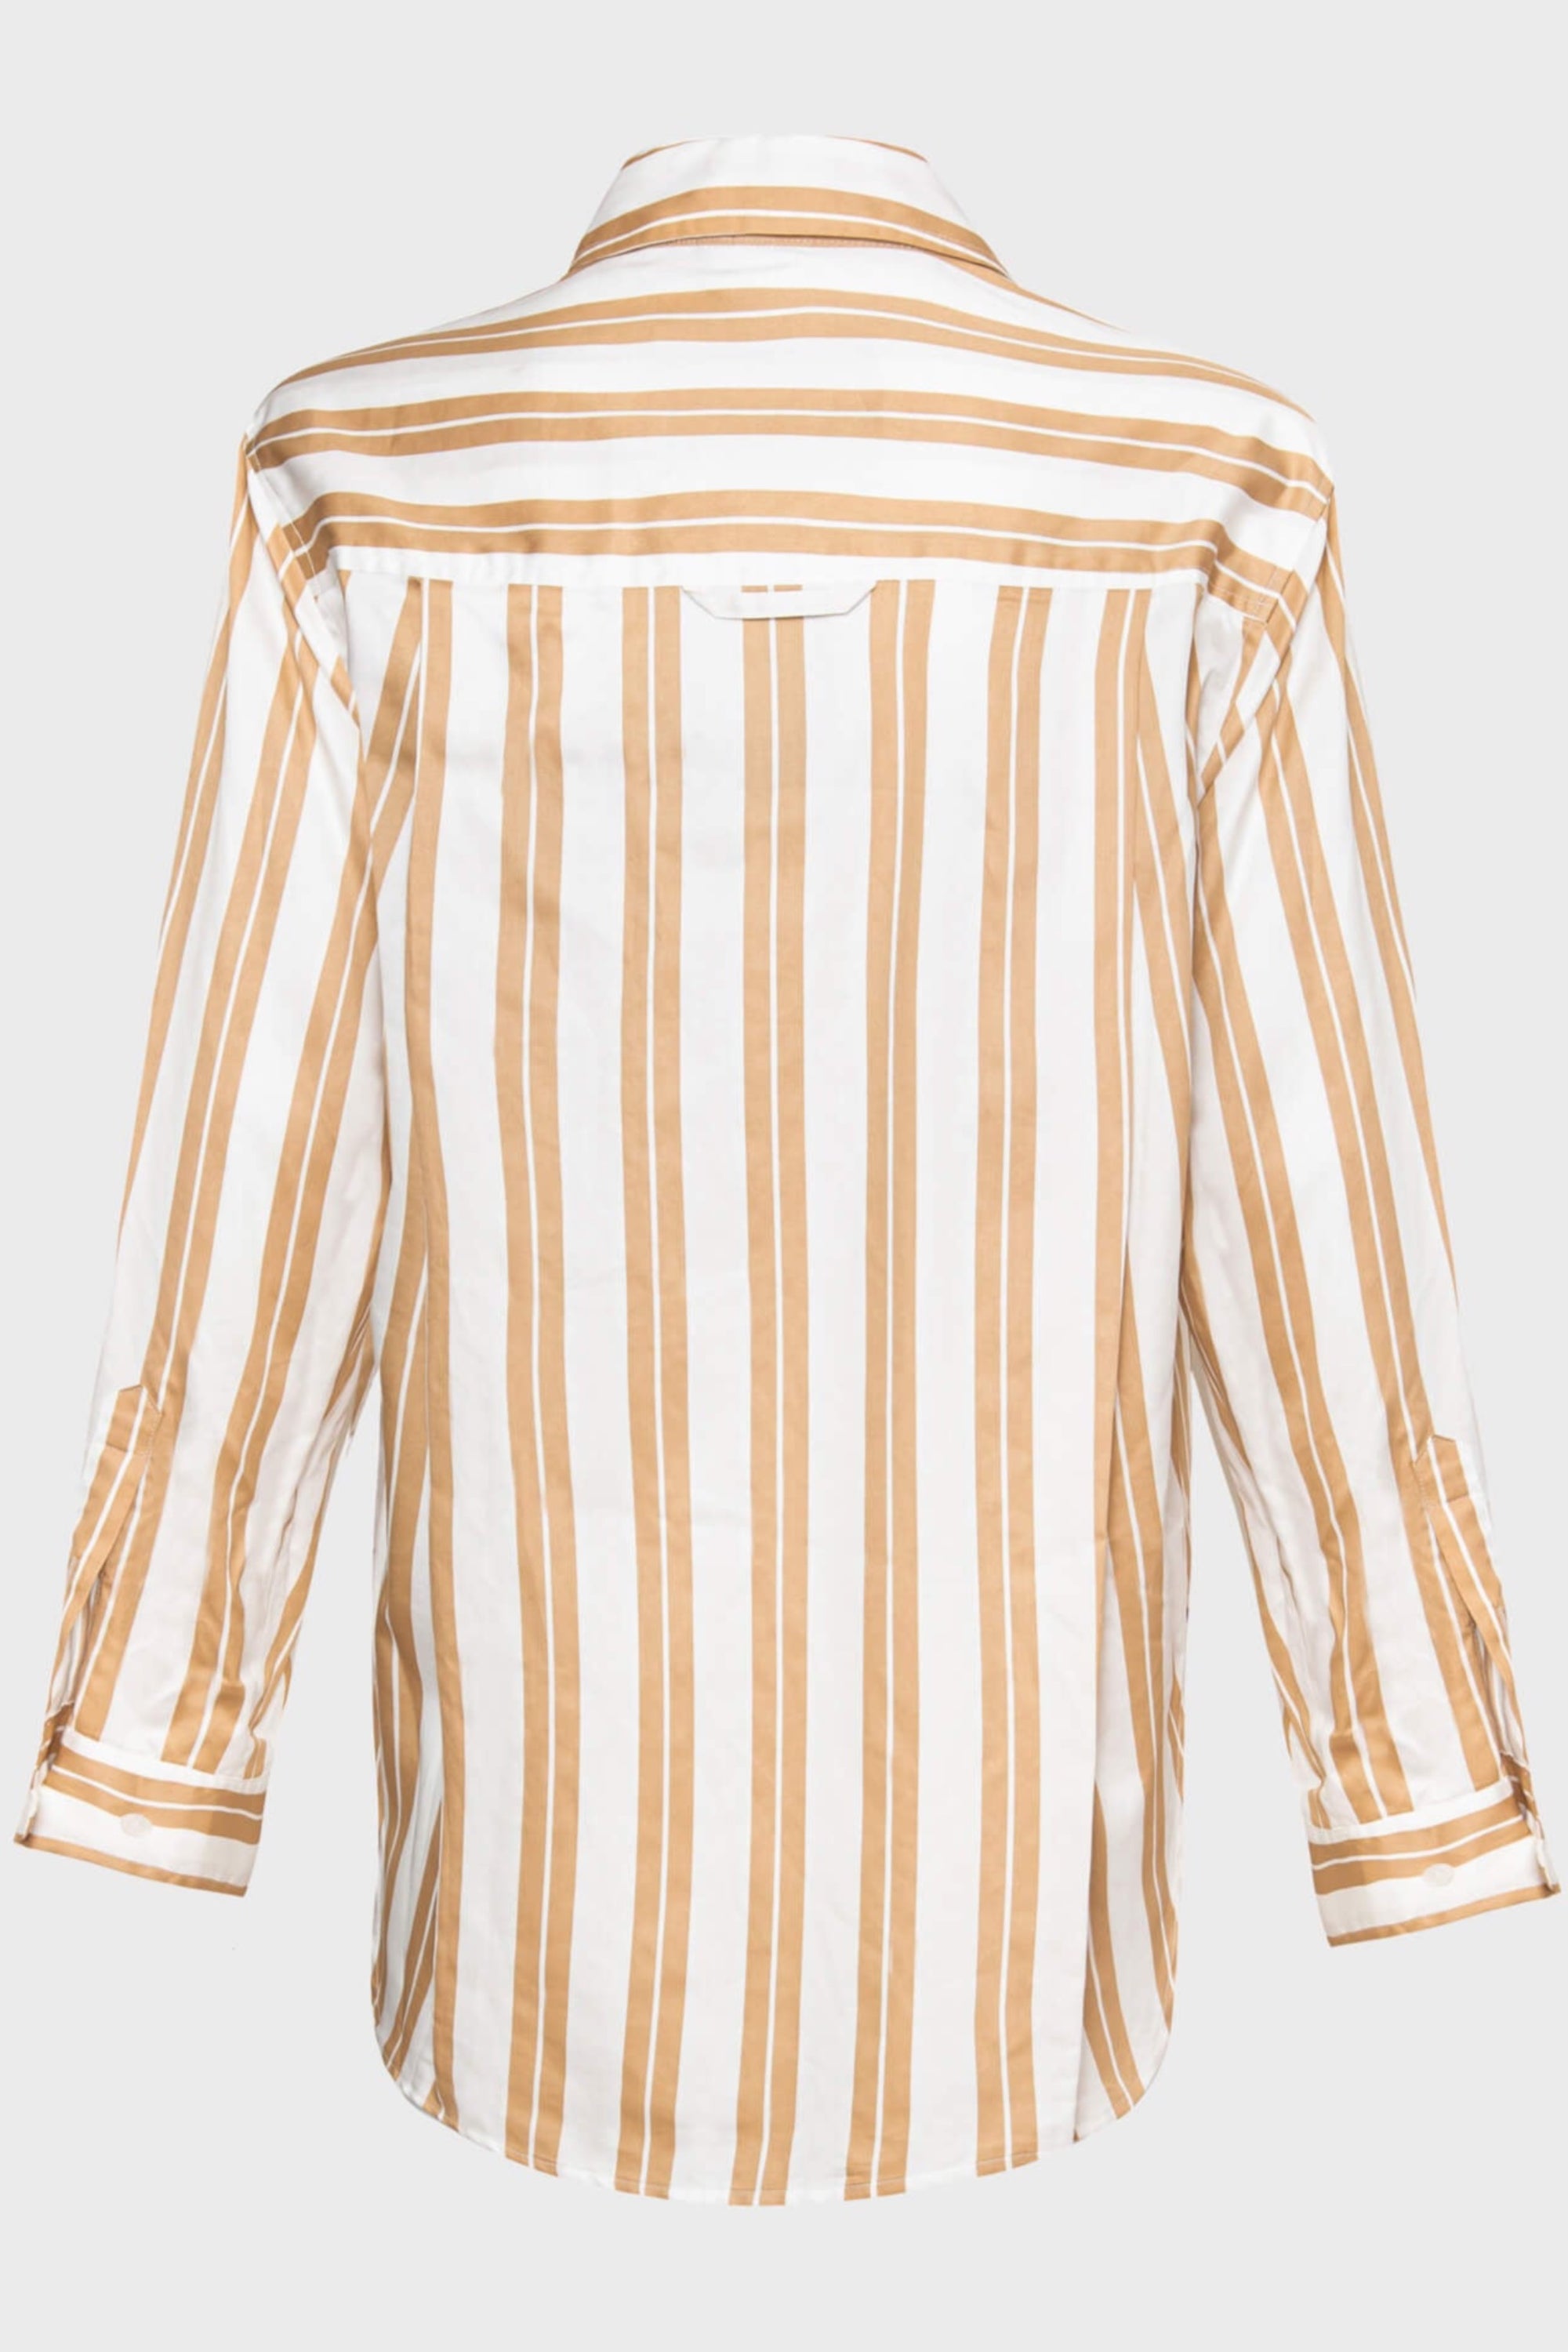 Mika boyfriend cut wide stripe button down shirt